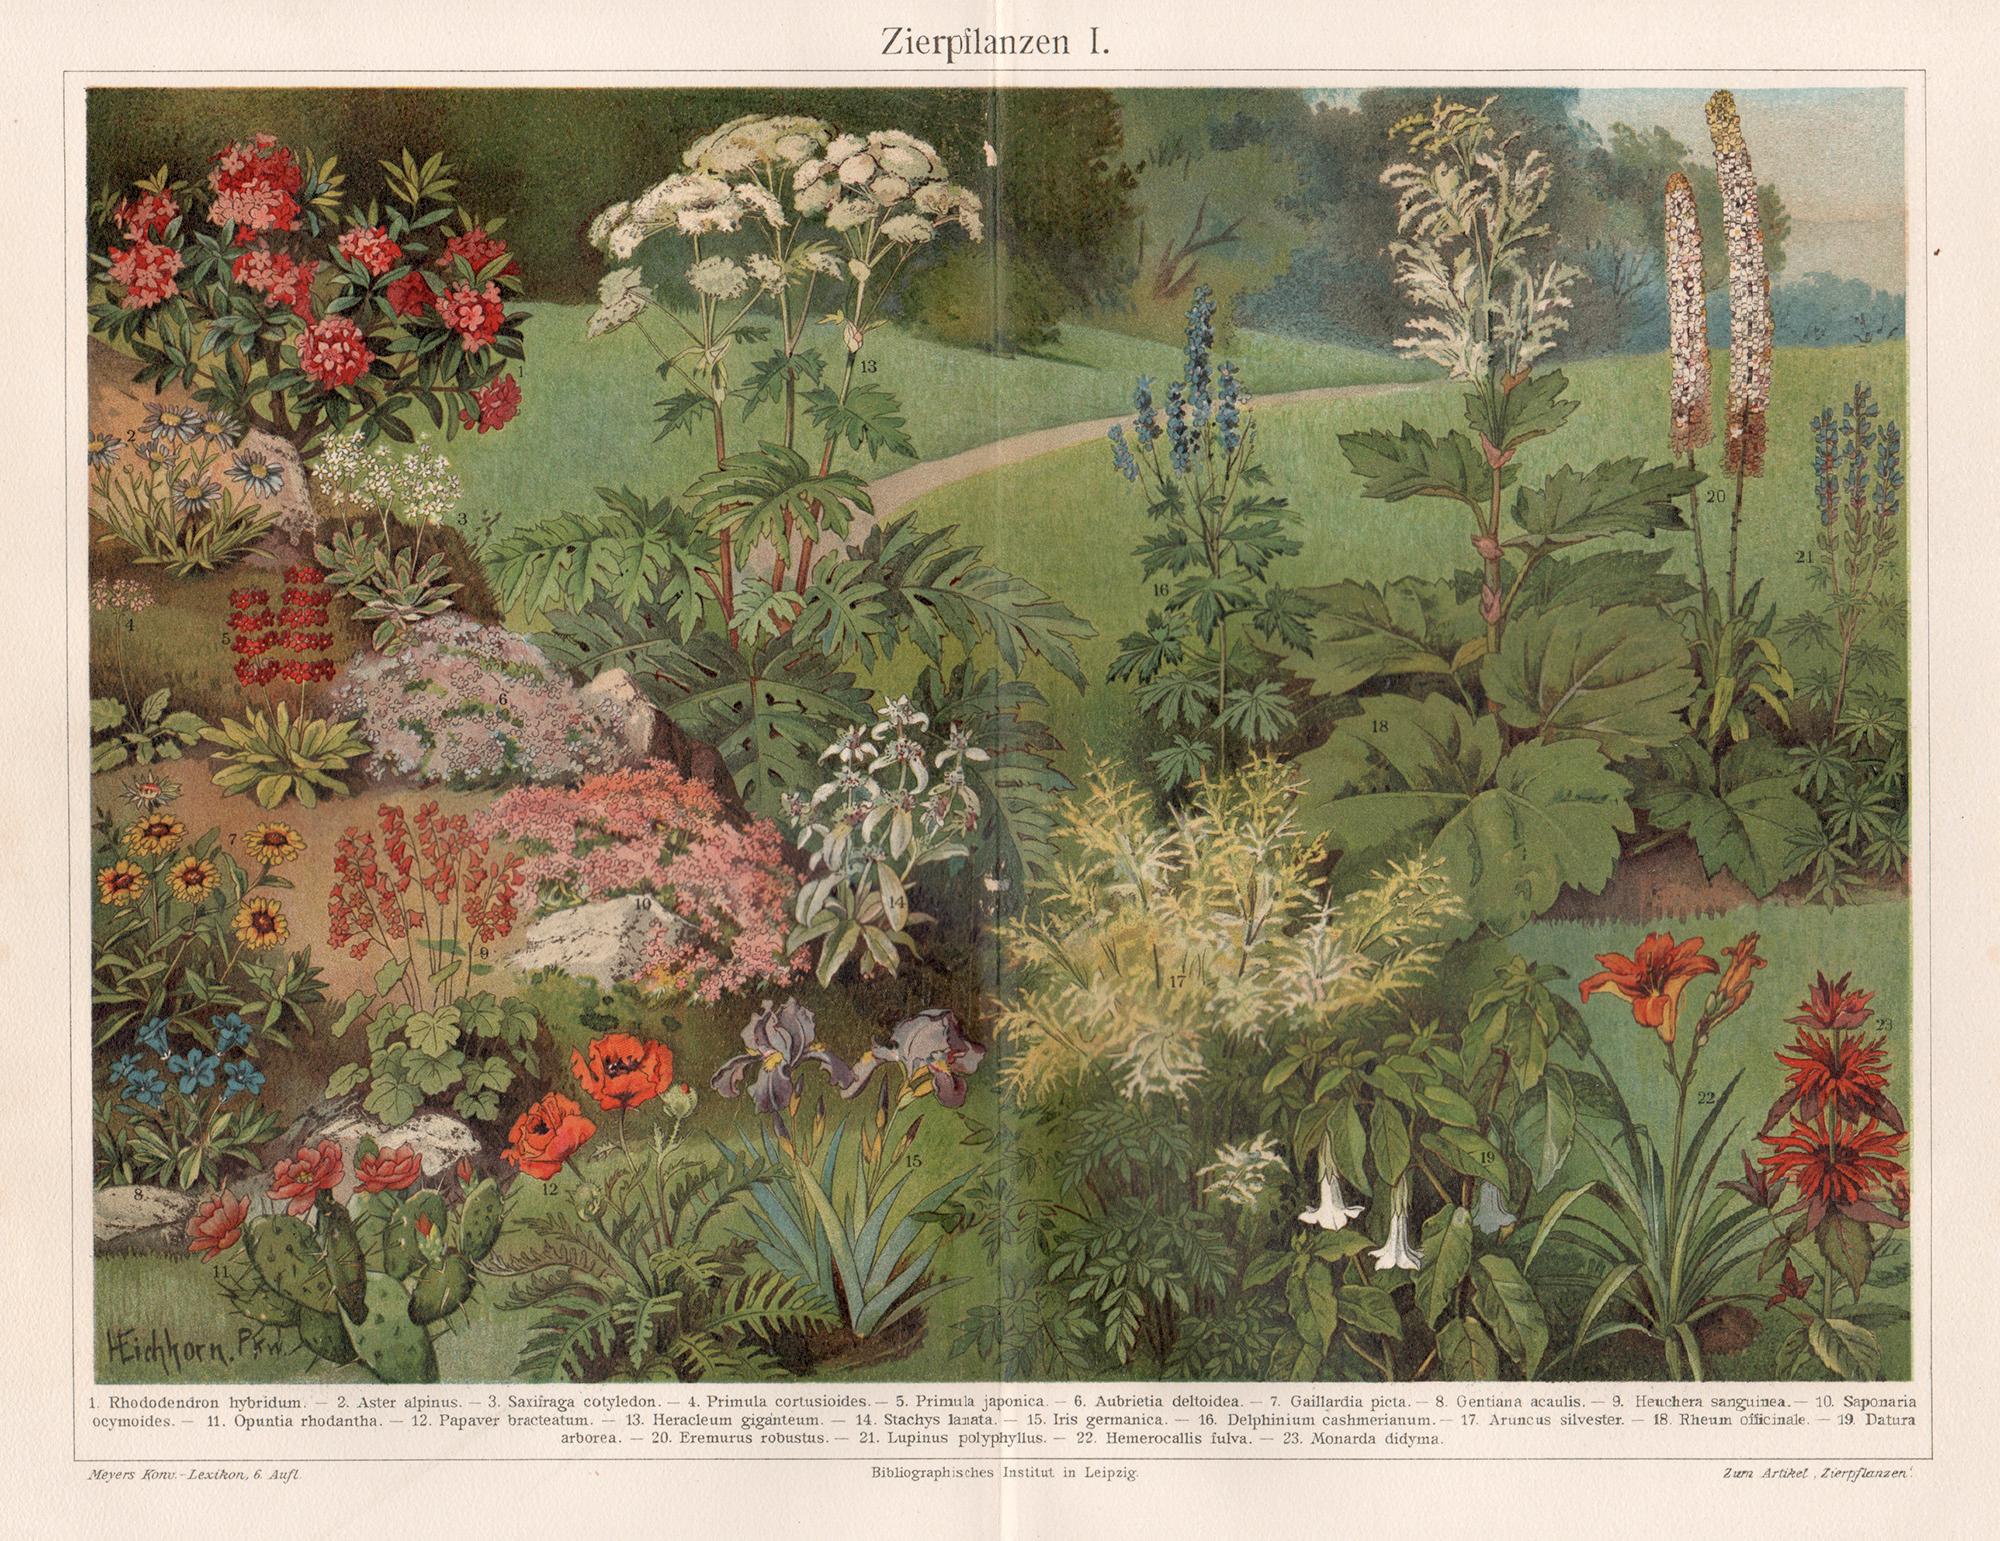 Unknown Print - Zierpilanzen (Ornamental Plants) German antique botanical chromolithograph print